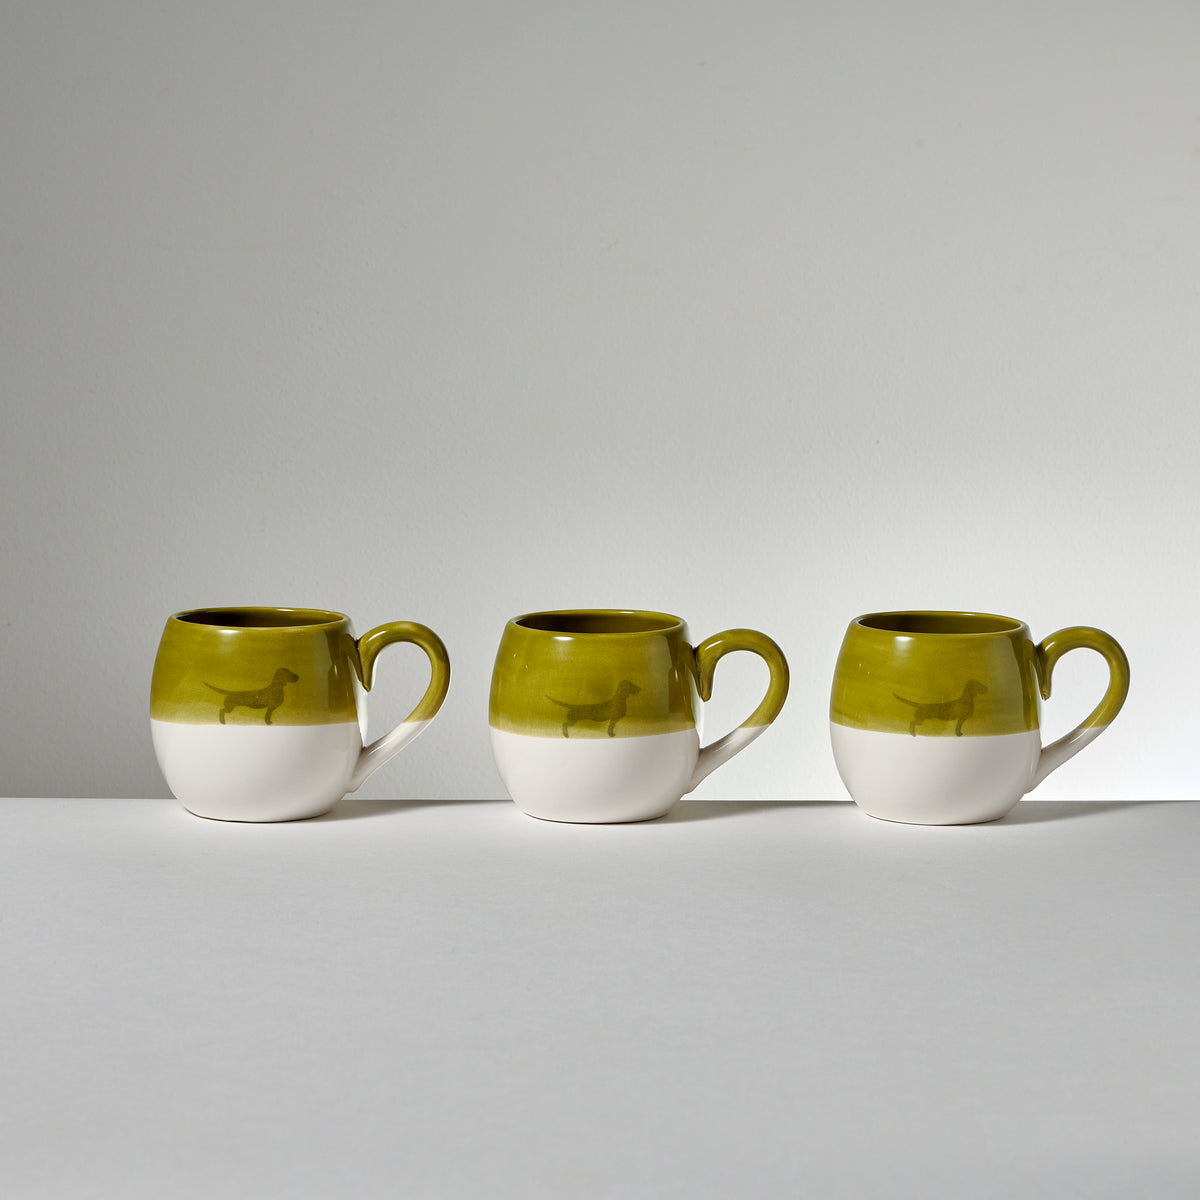 Keramik Dackel Tasse olivegrün von Alma & Gustl